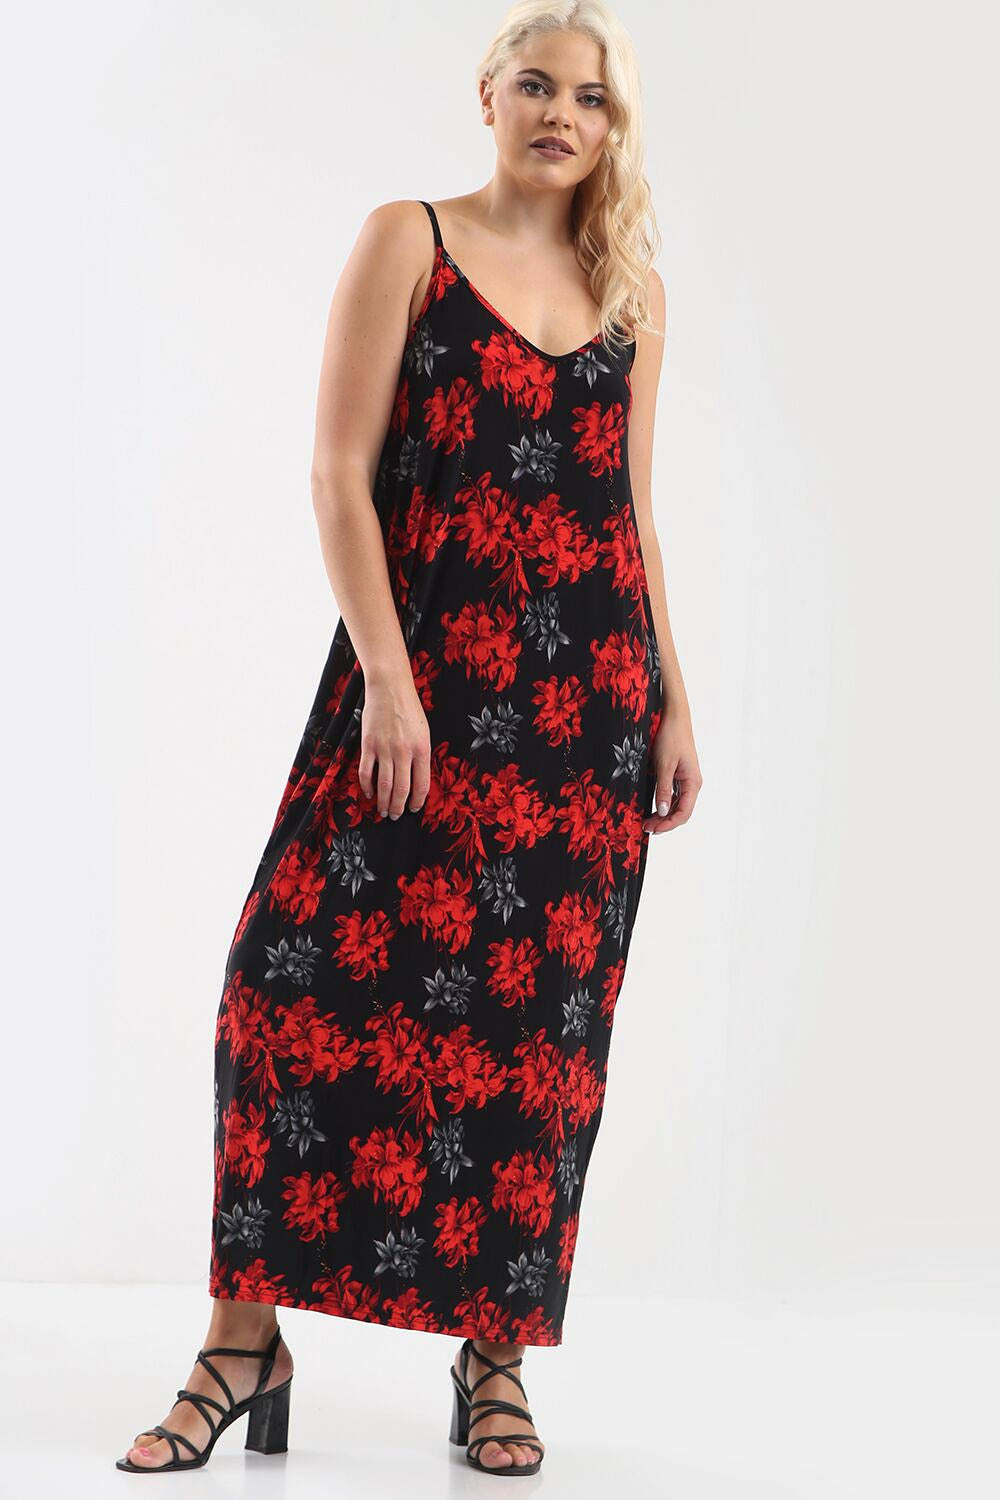 Cami Floral Print Floaty Strappy Maxi Dress - bejealous-com